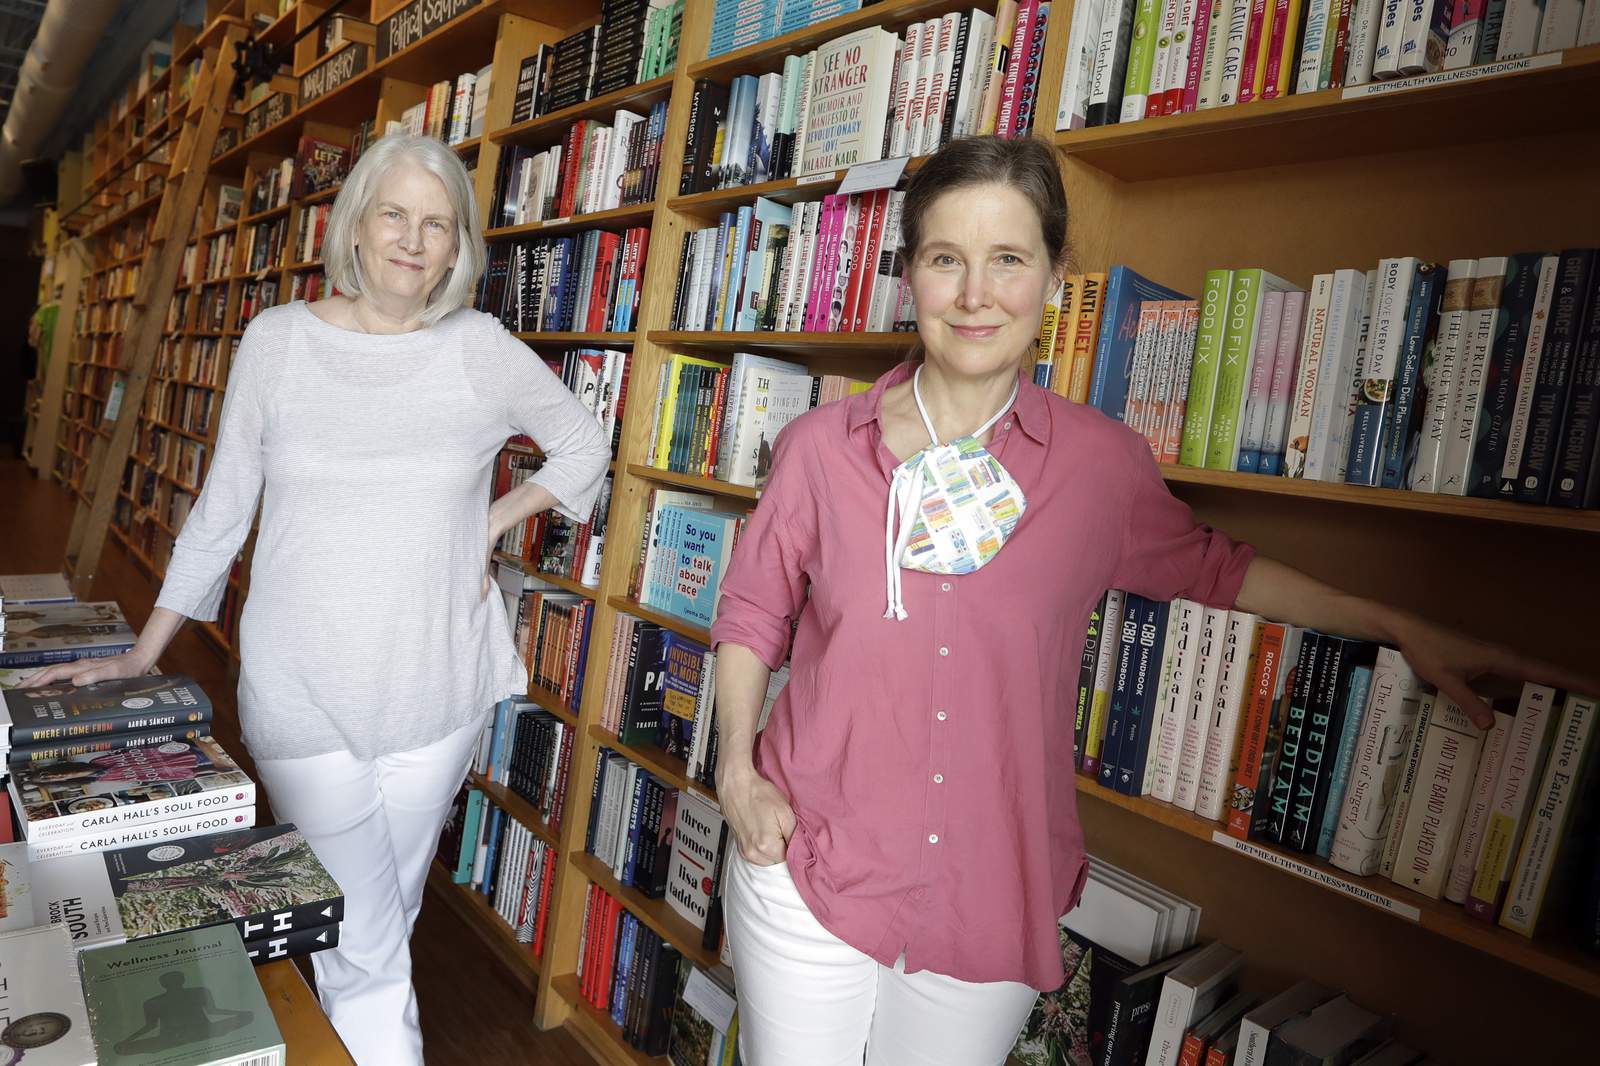 Novelist Patchett has Nashville bookstore customers swooning